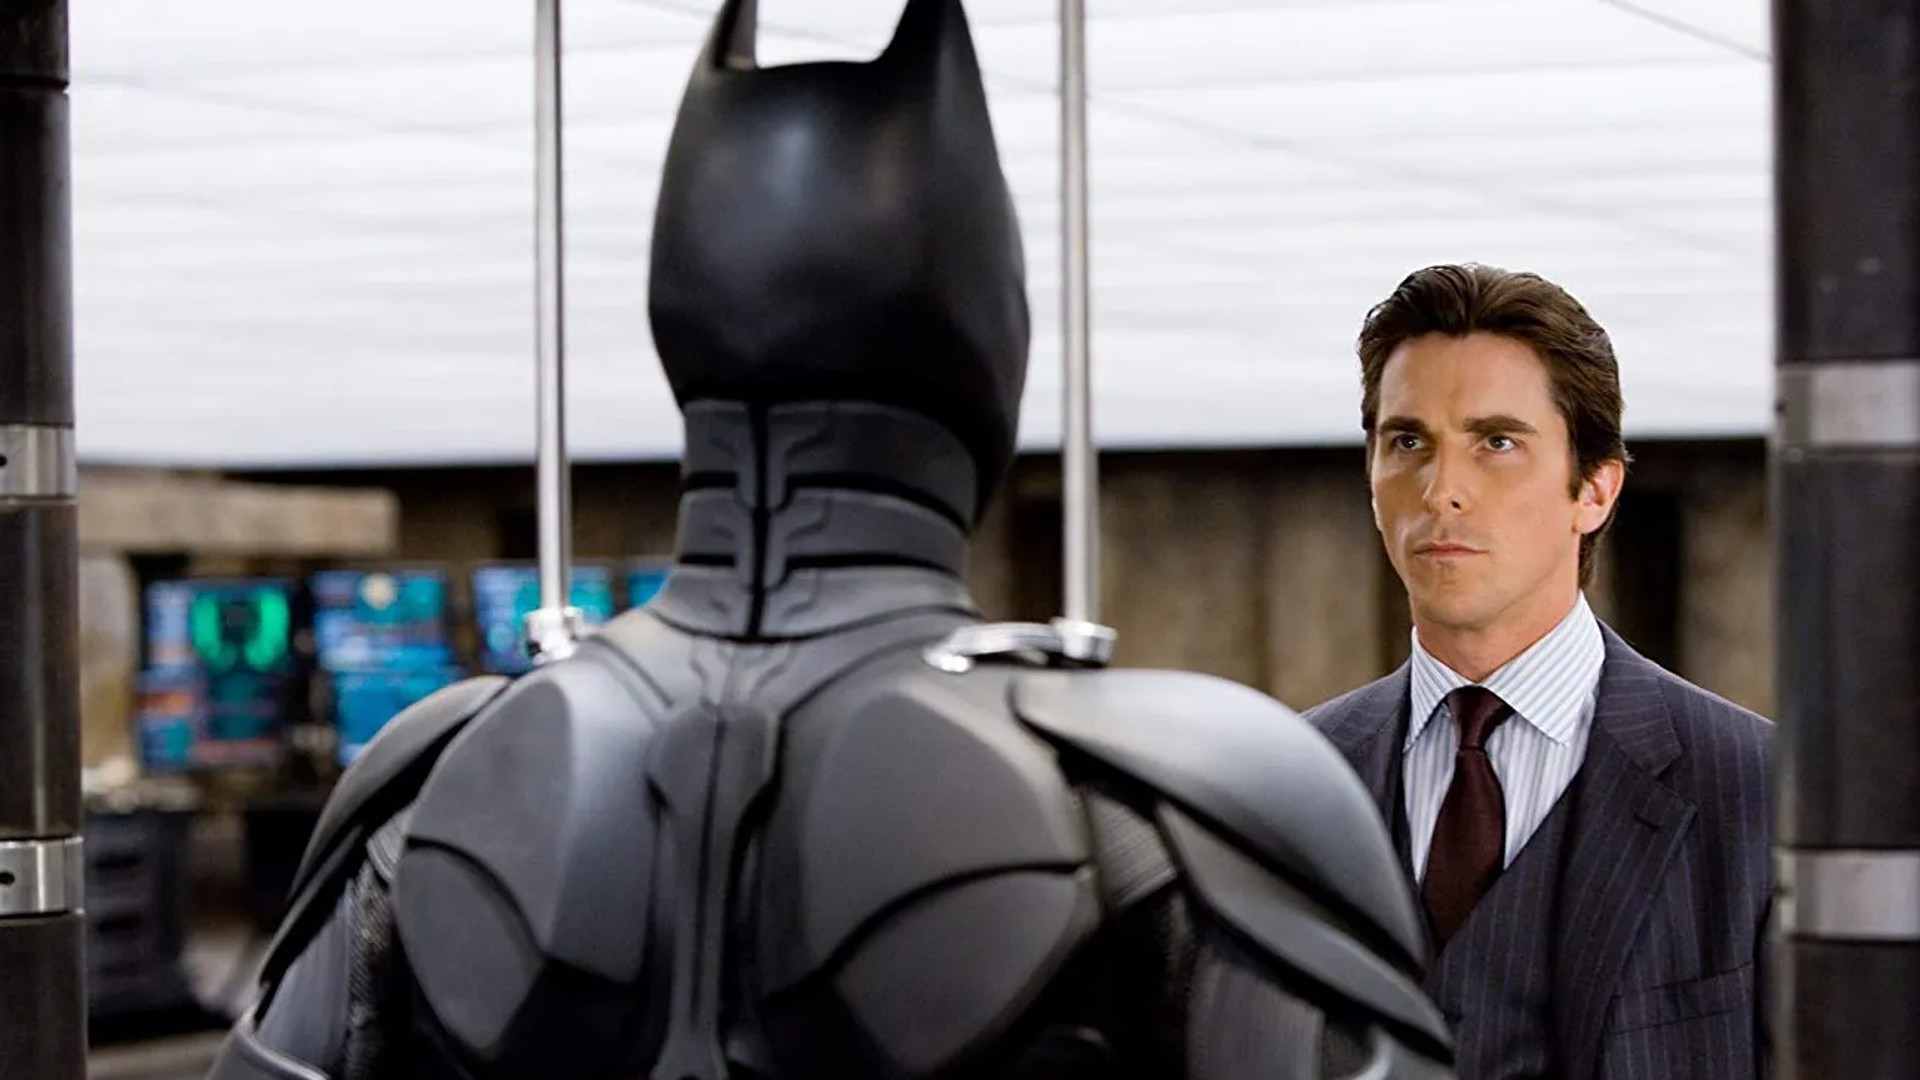 Christian Bale como Batman